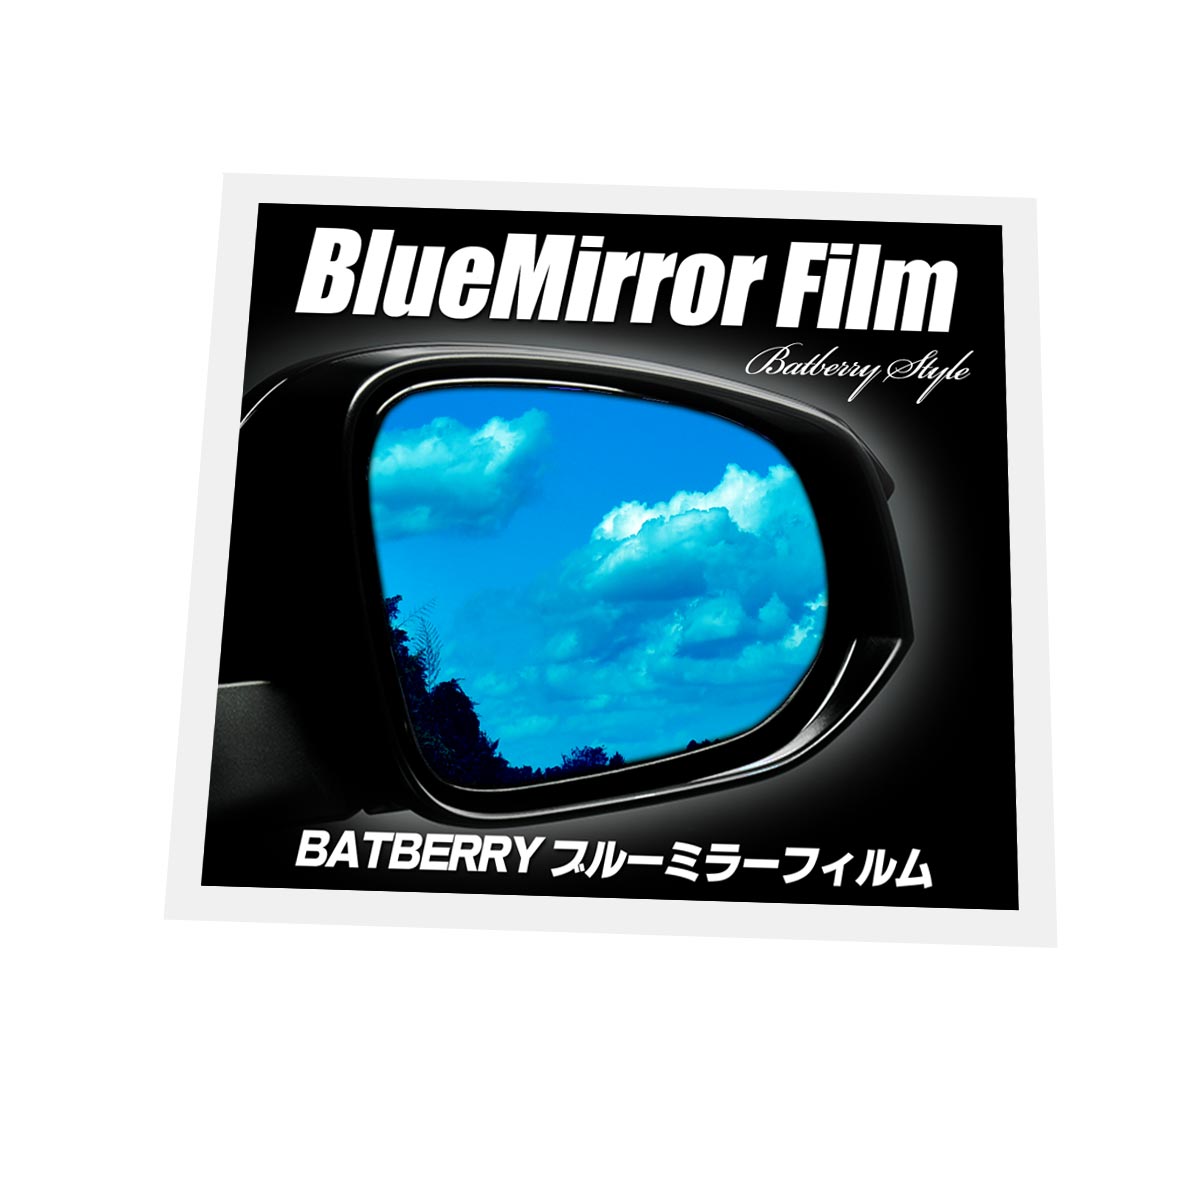 BATBERRY ブルーミラーフィルム ホンダ フィットRS GK5 後期用 左右セット【ポイント消化】 オートパーツ フジプランニング